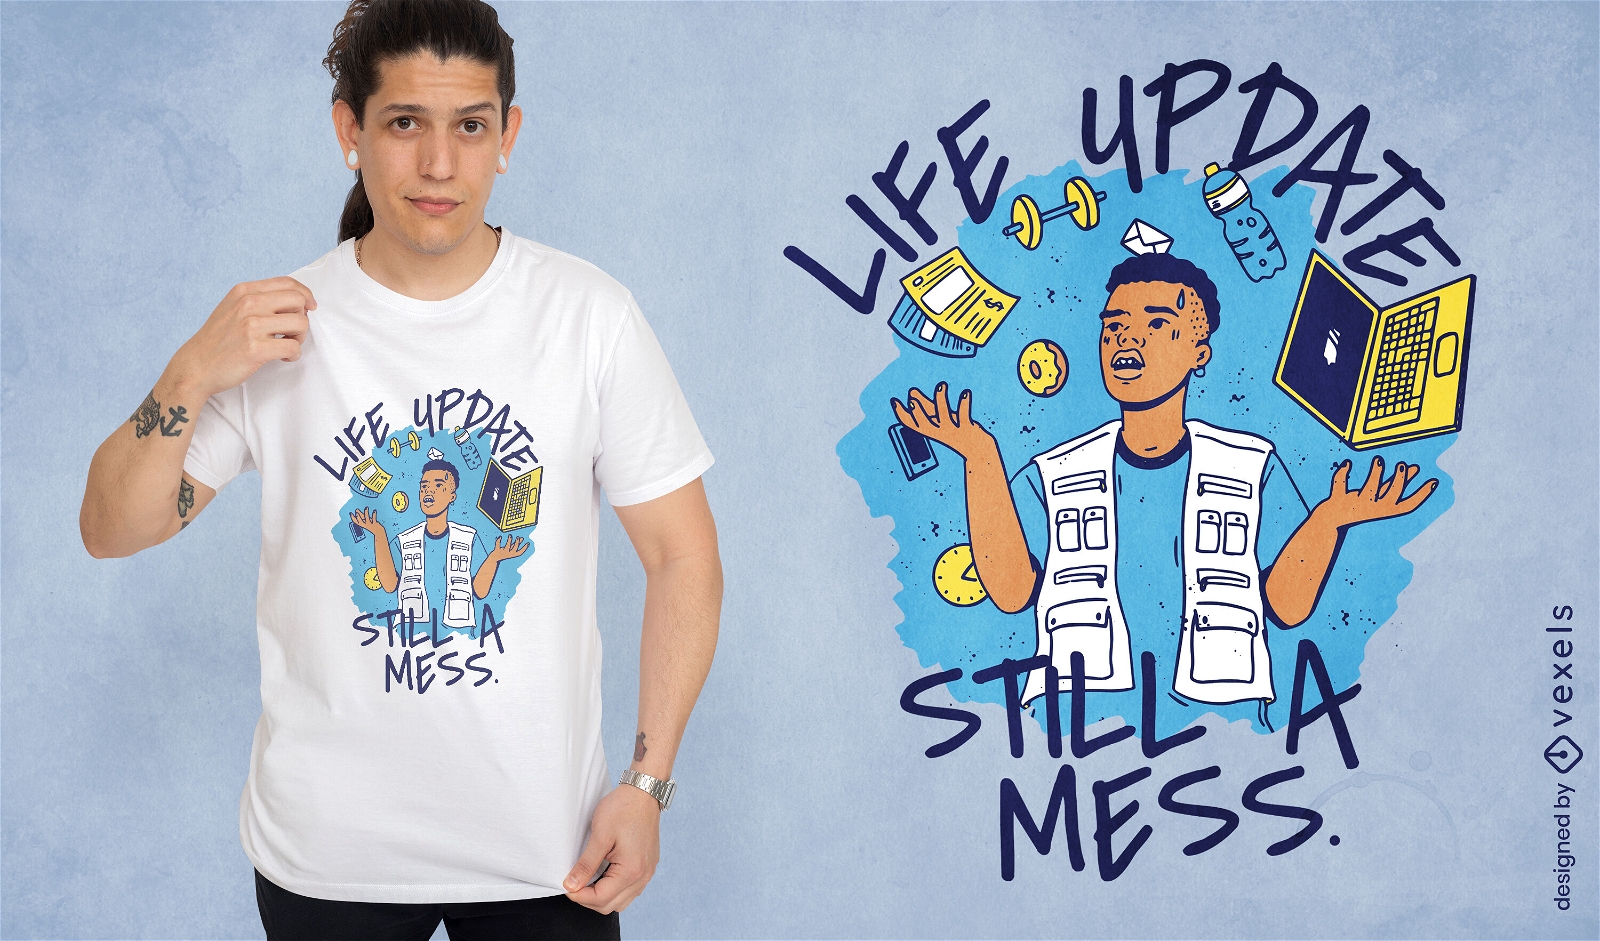 Life is a mess t-shirt design